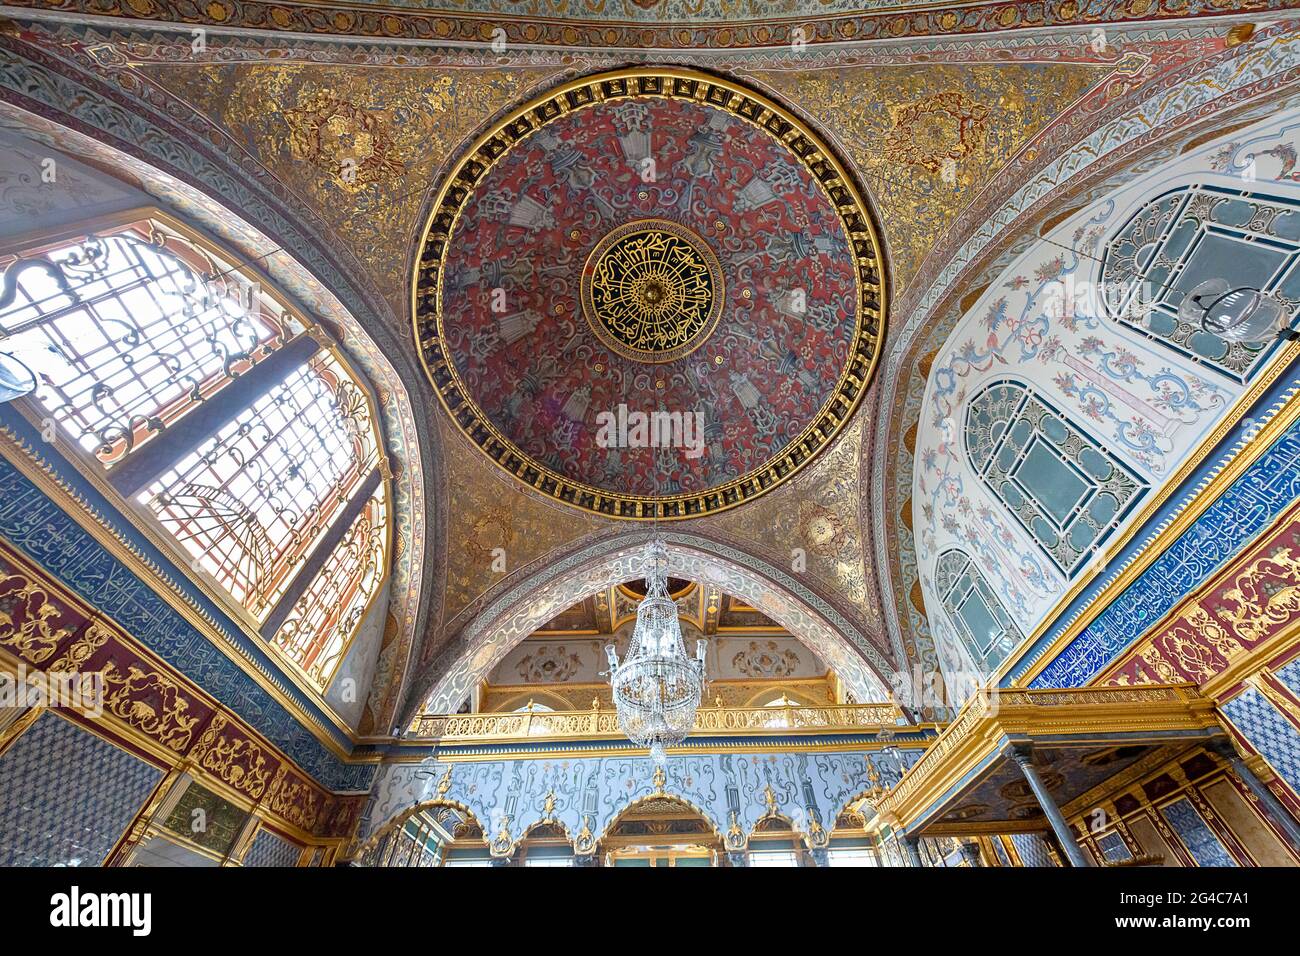 Kuppel des Kaiserzimmers im Harem-Teil des Topkapi-Palastes in Istanbul, Türkei Stockfoto